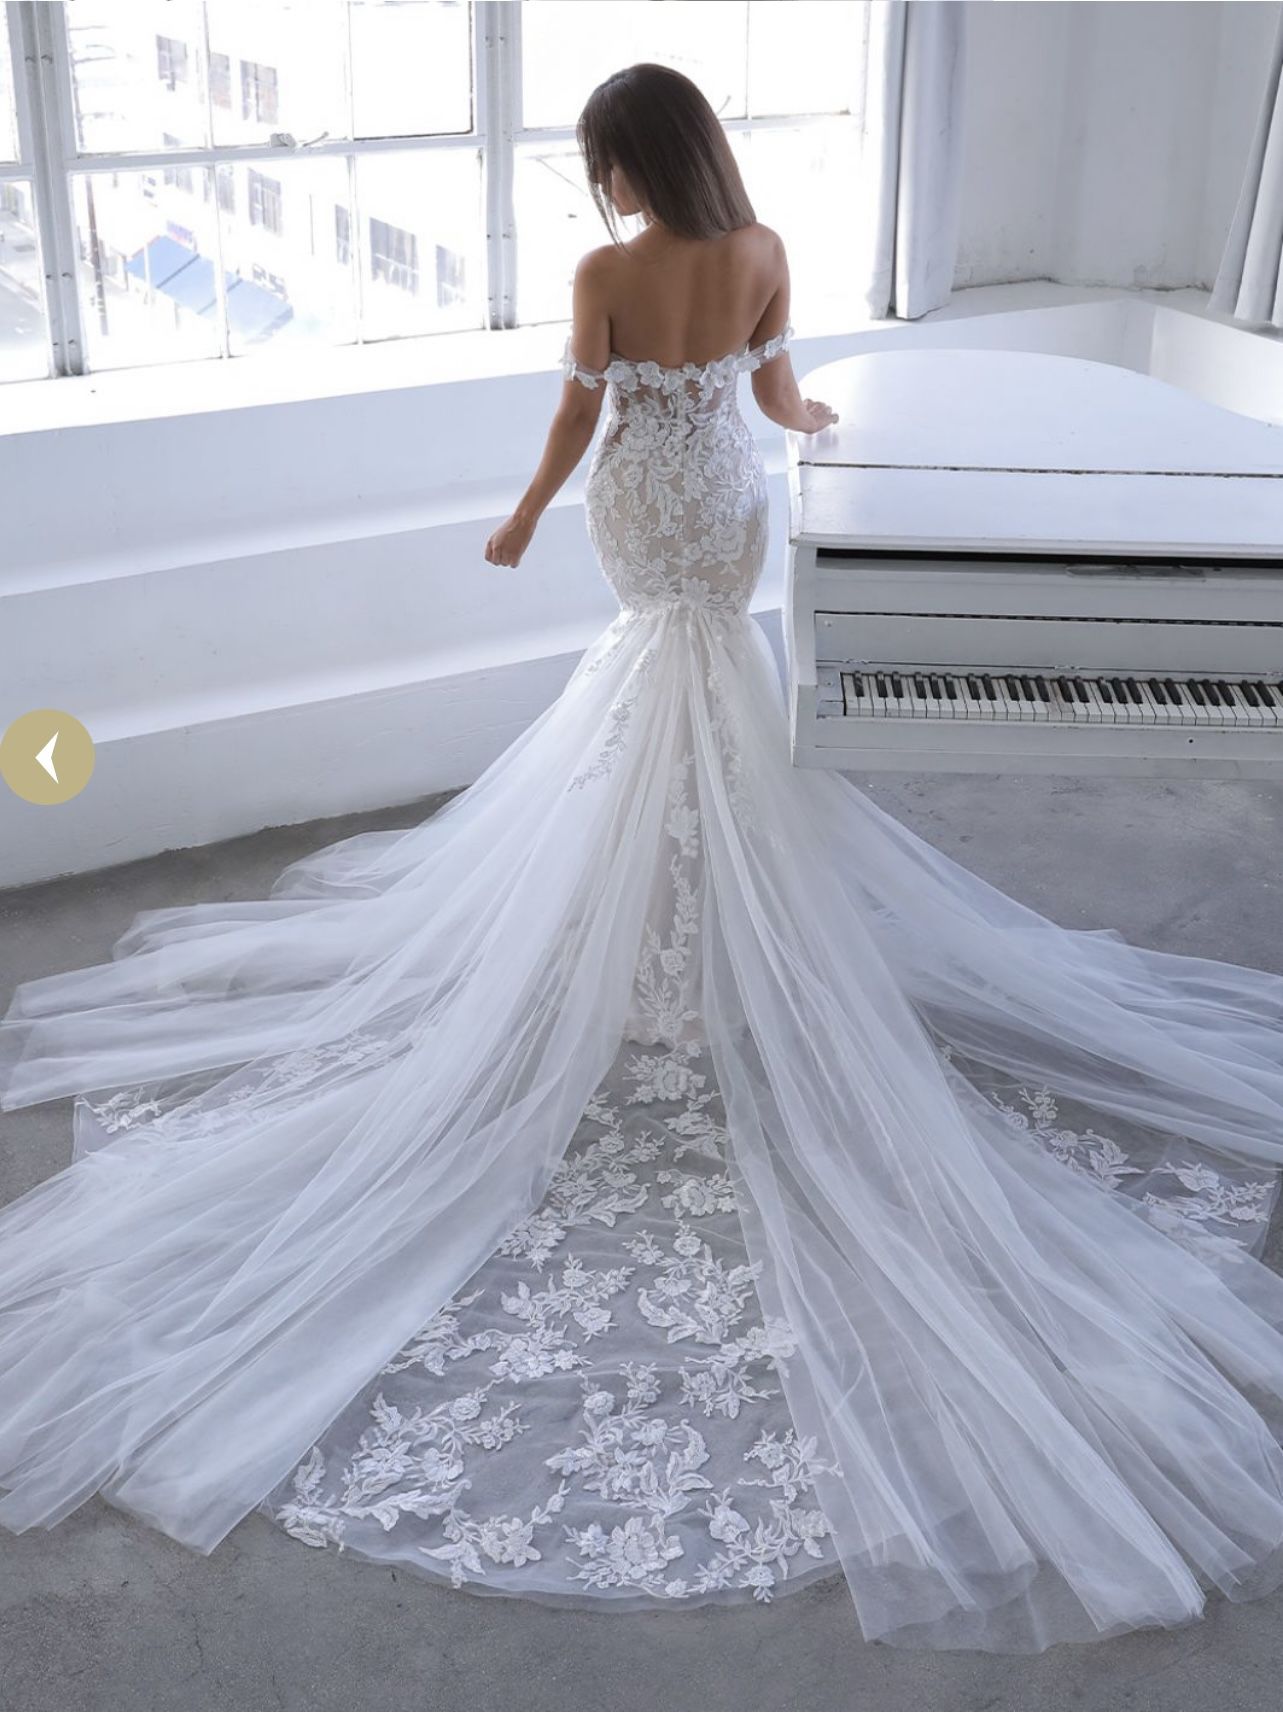 Brand New Enzoani Narine Ivory Mermaid Wedding Dress Size 8 With Tags